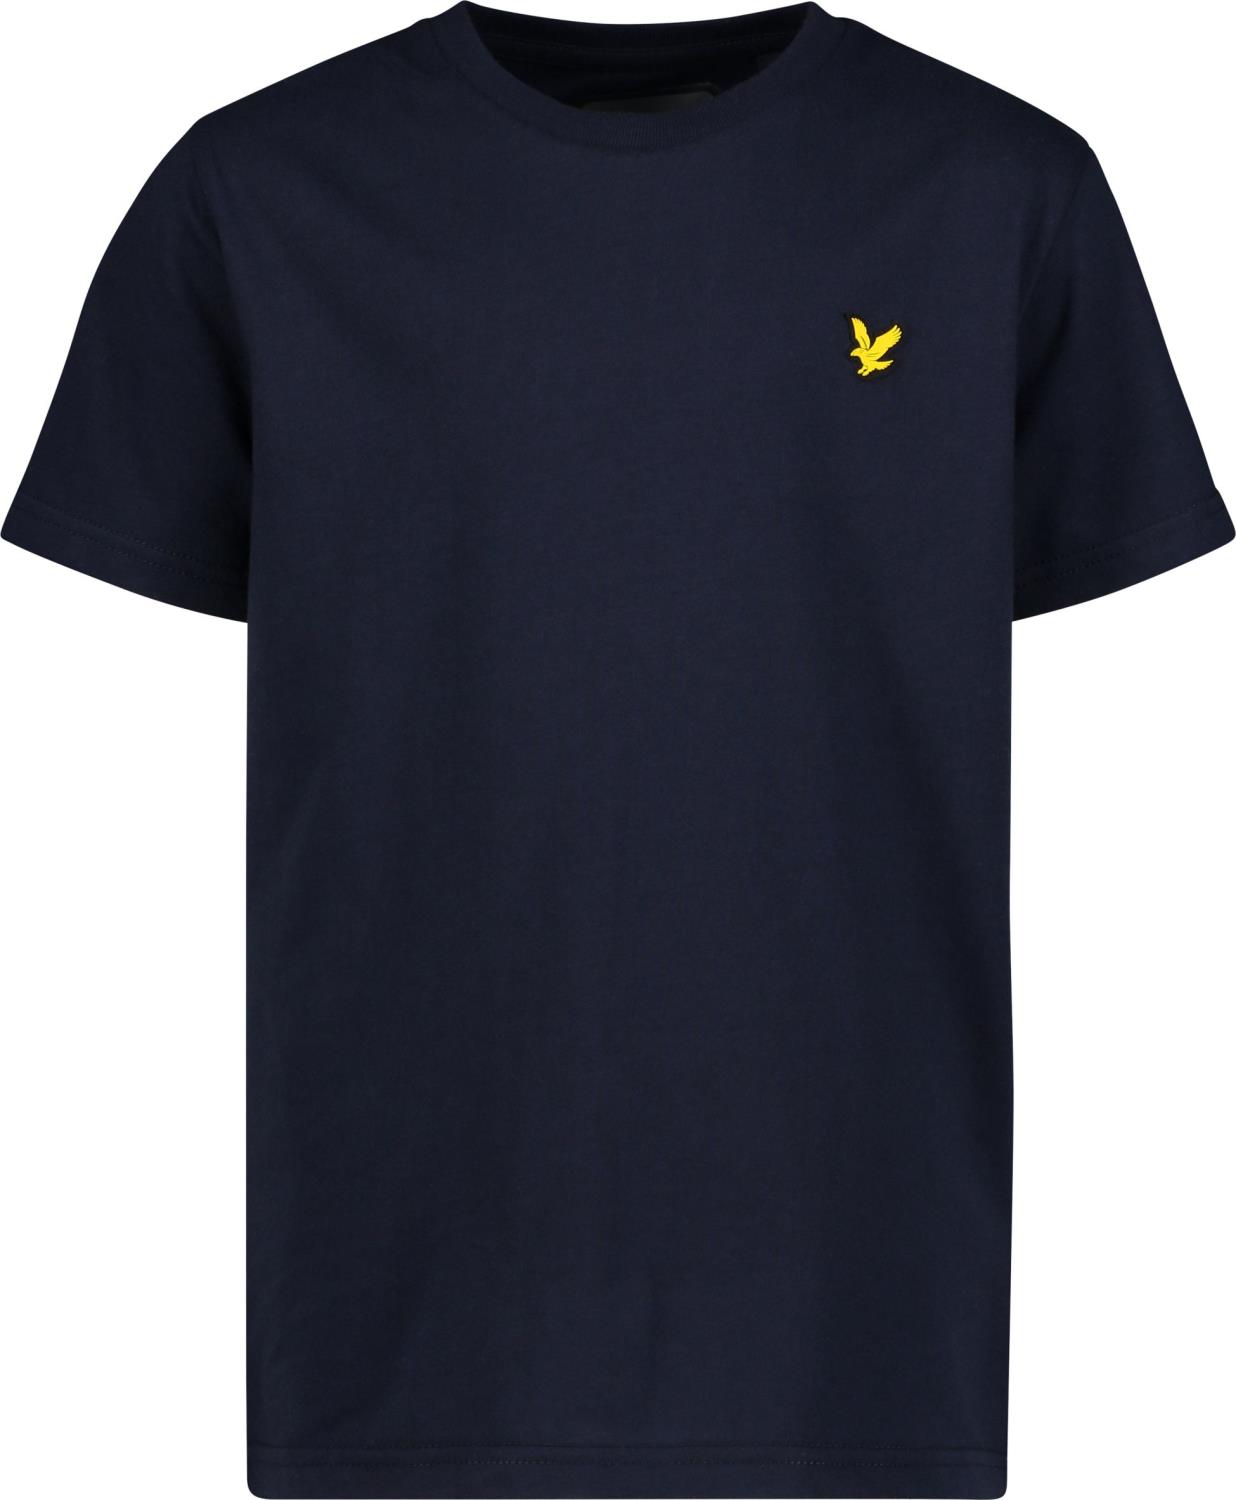 T-skjorte Sport Tech - Lyle & Scott - Navy